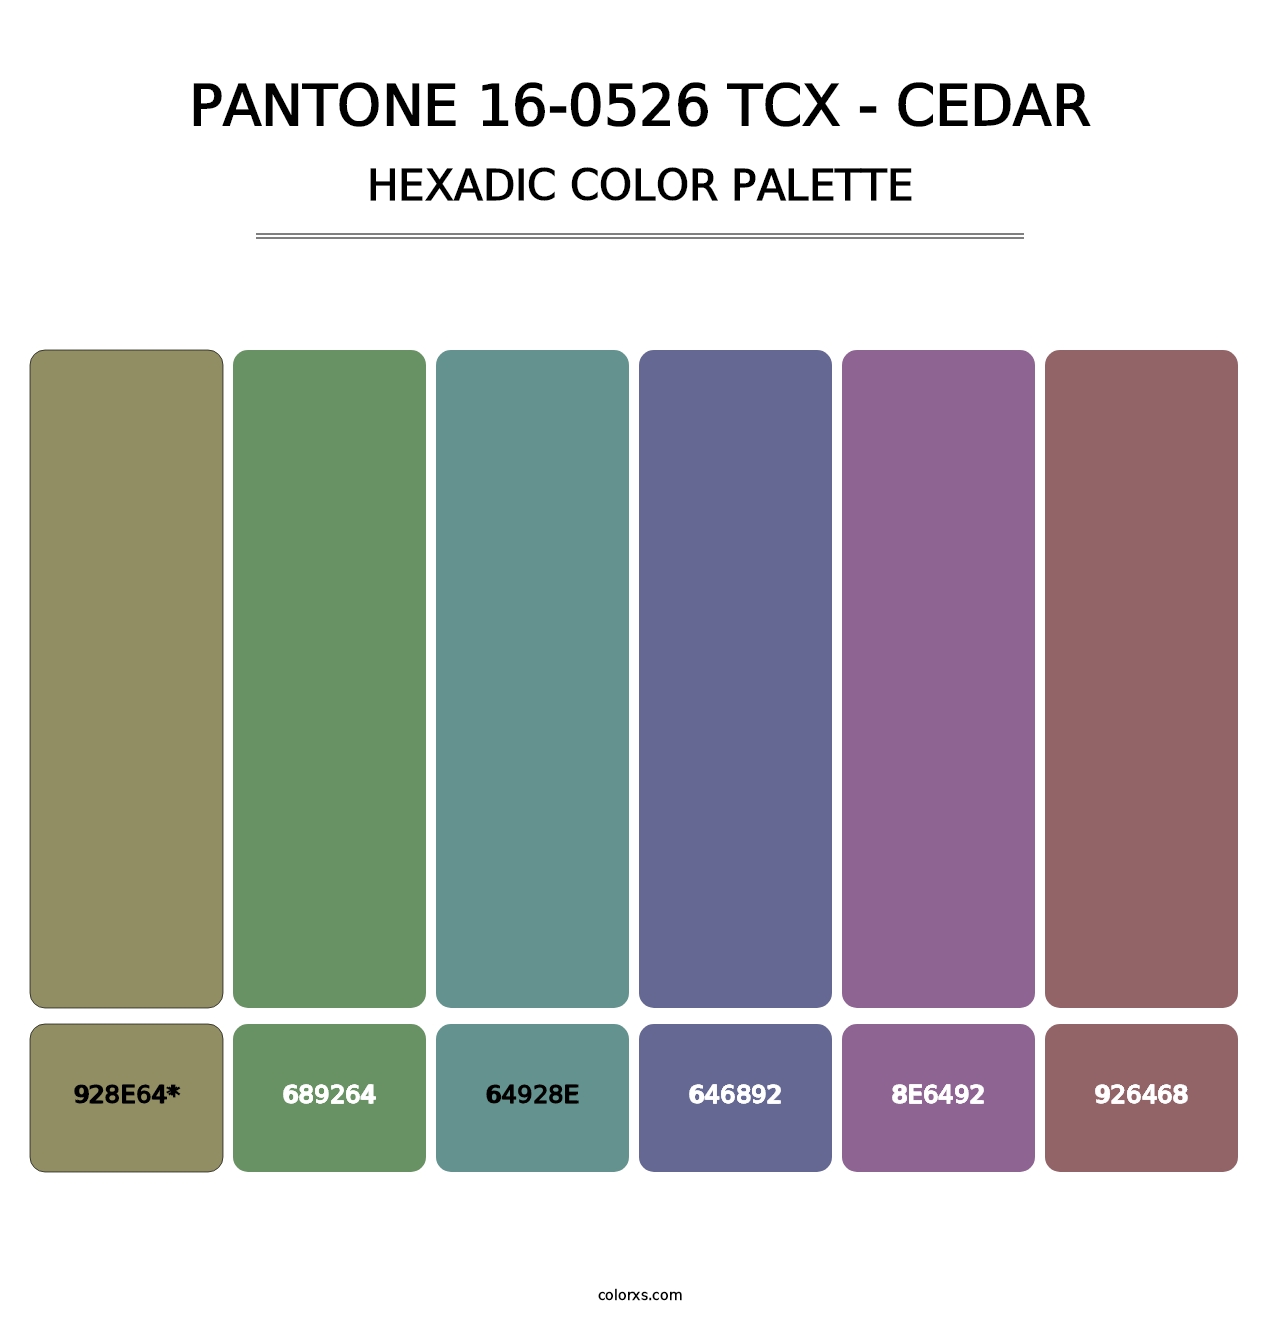 PANTONE 16-0526 TCX - Cedar - Hexadic Color Palette